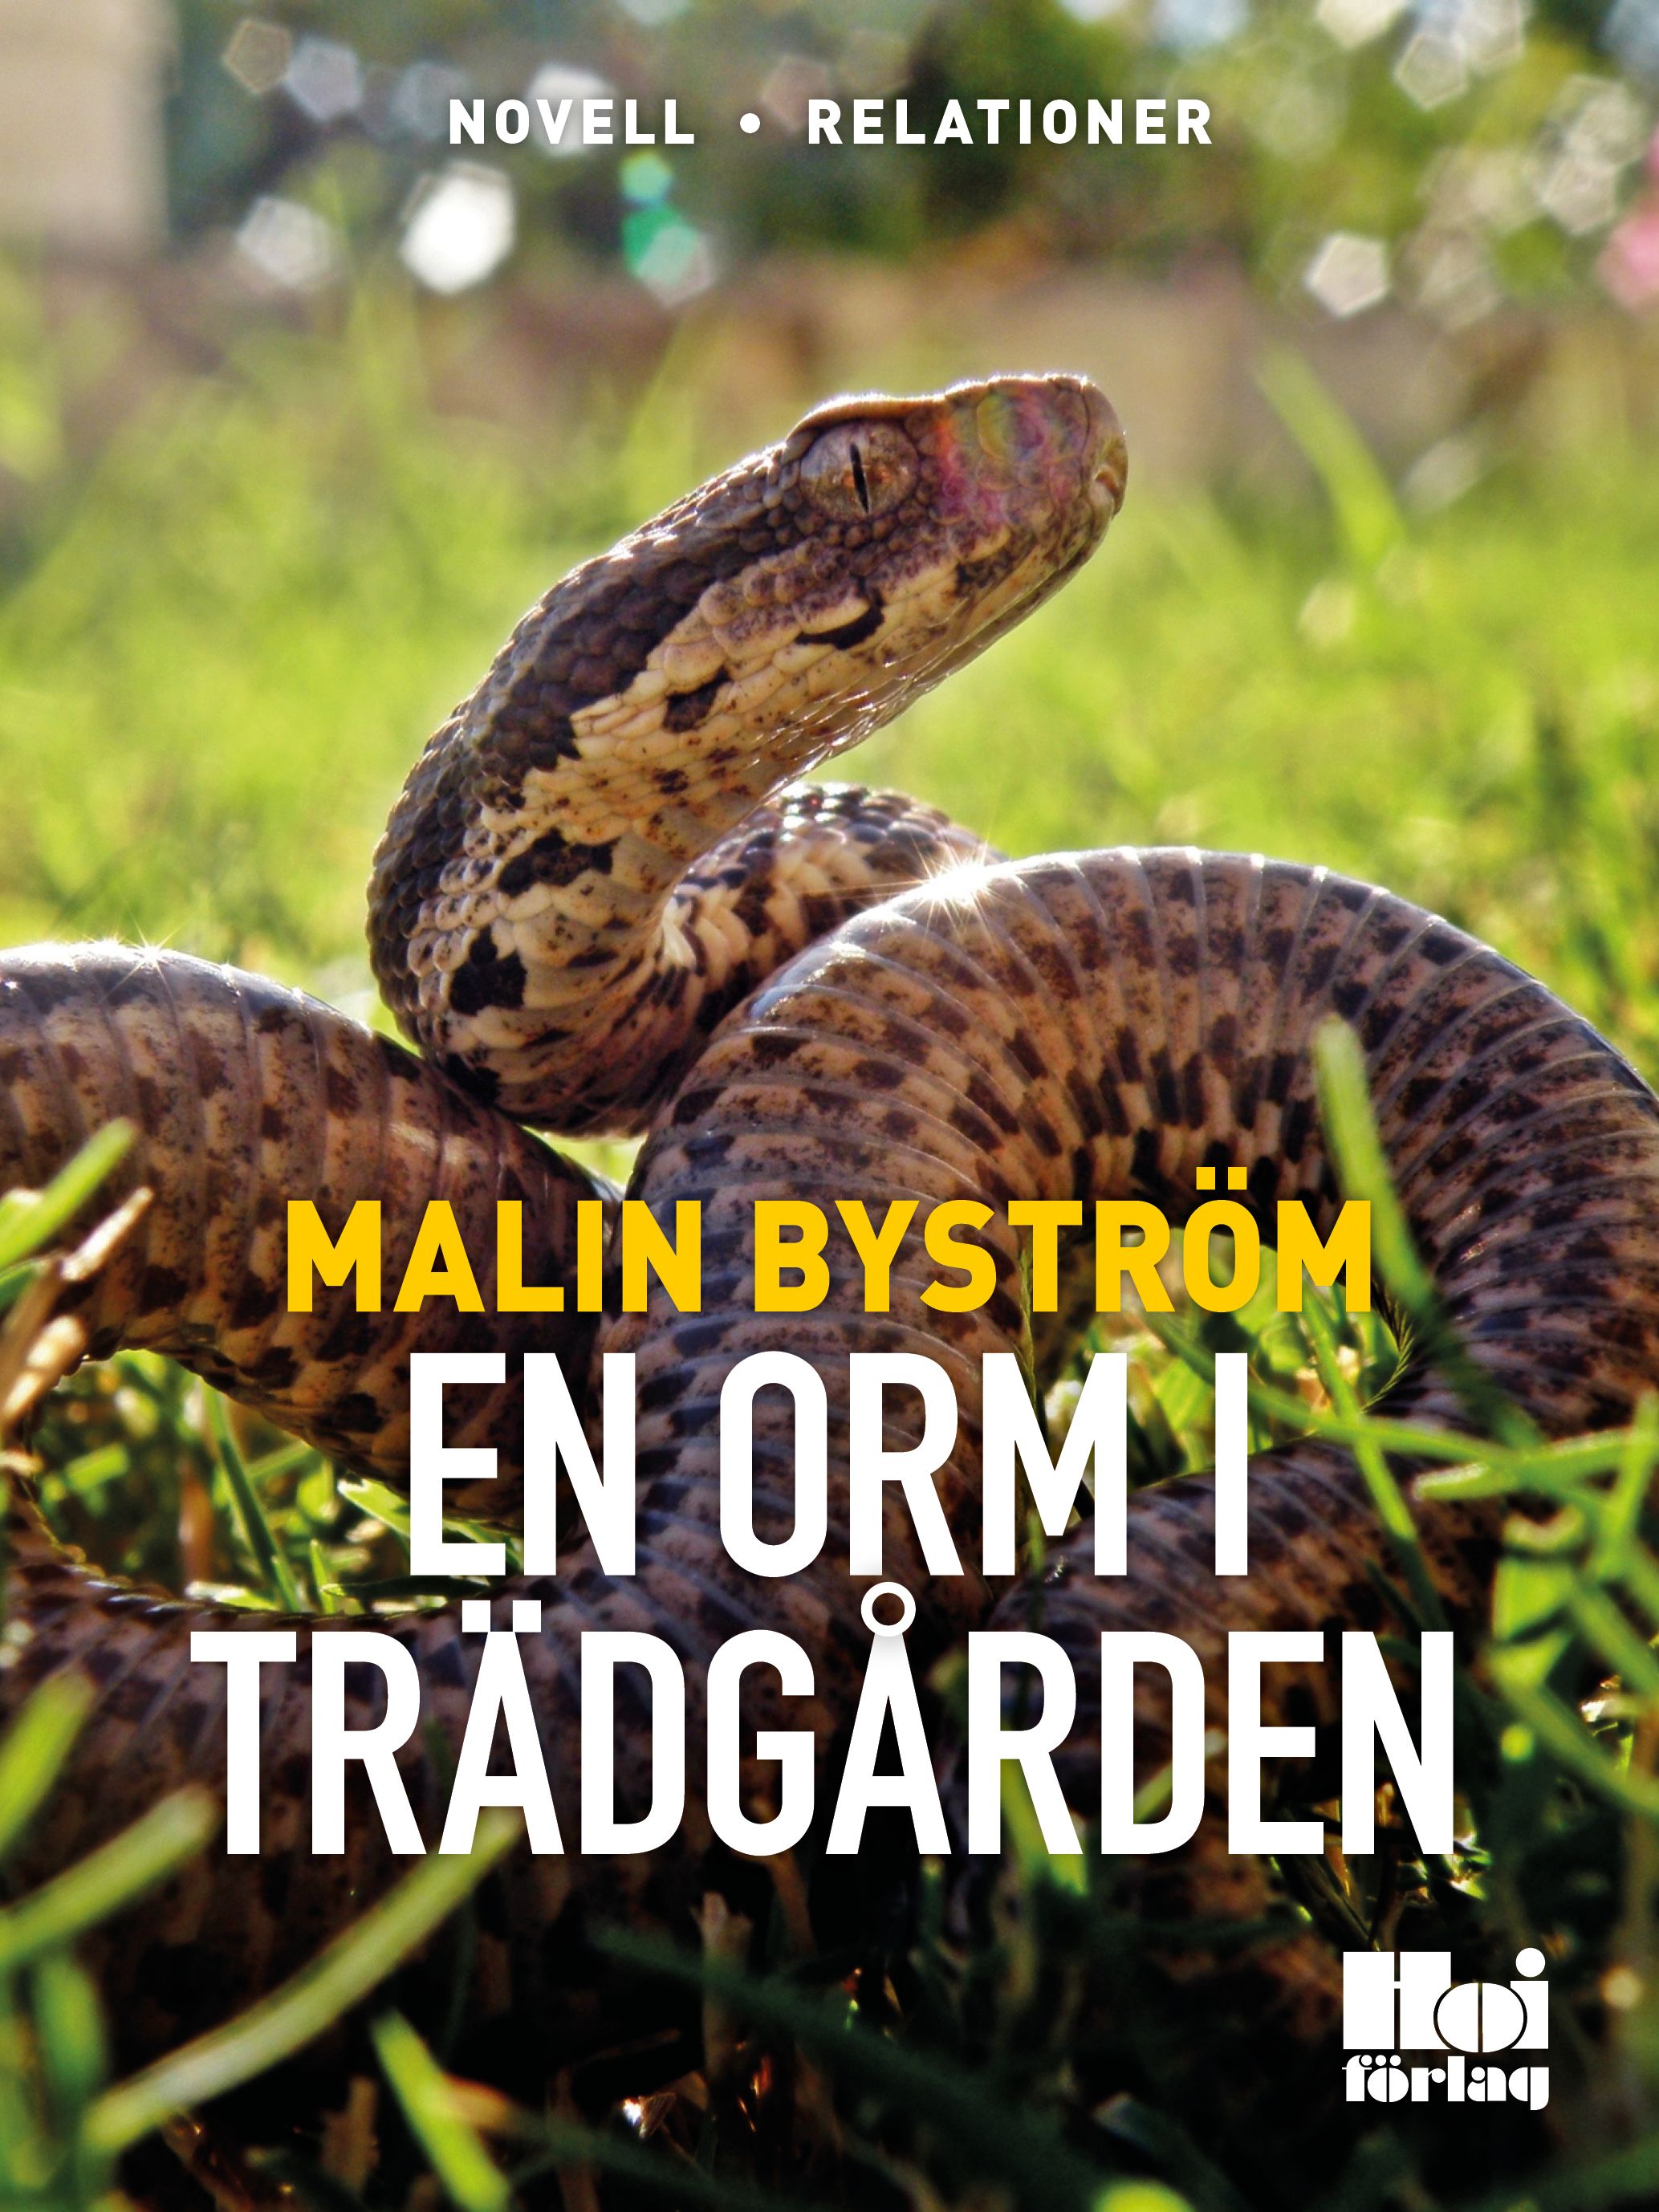 En orm i trädgården, eBook by Malin Byström